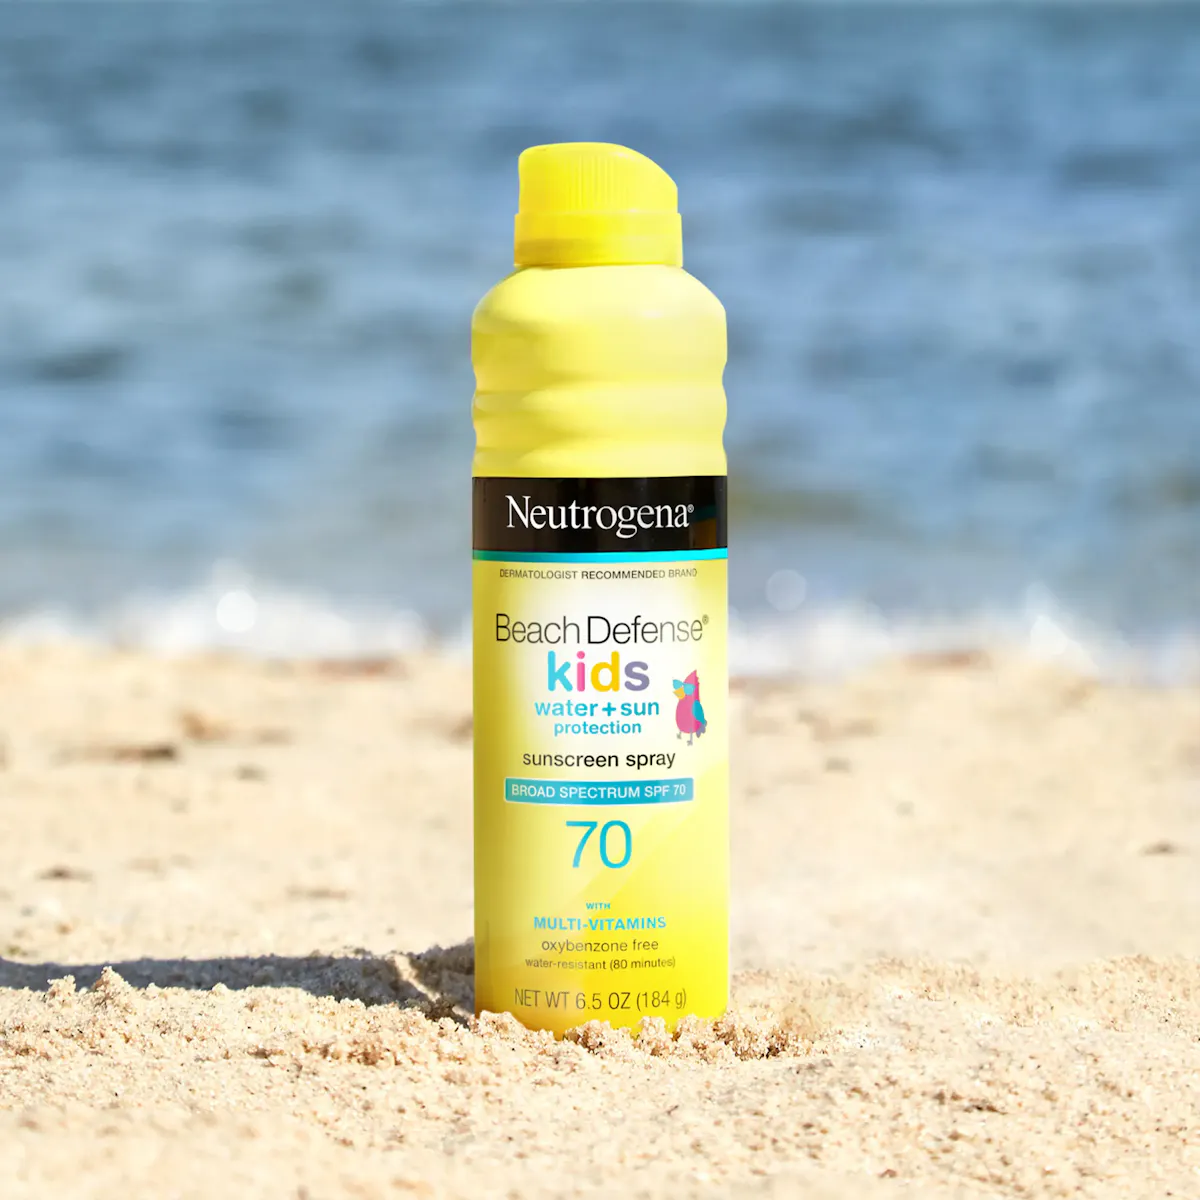 Beach Defense™ Kids Sunscreen Spray Broad Spectrum SPF 70 with  Multi-Vitamins | Neutrogena®